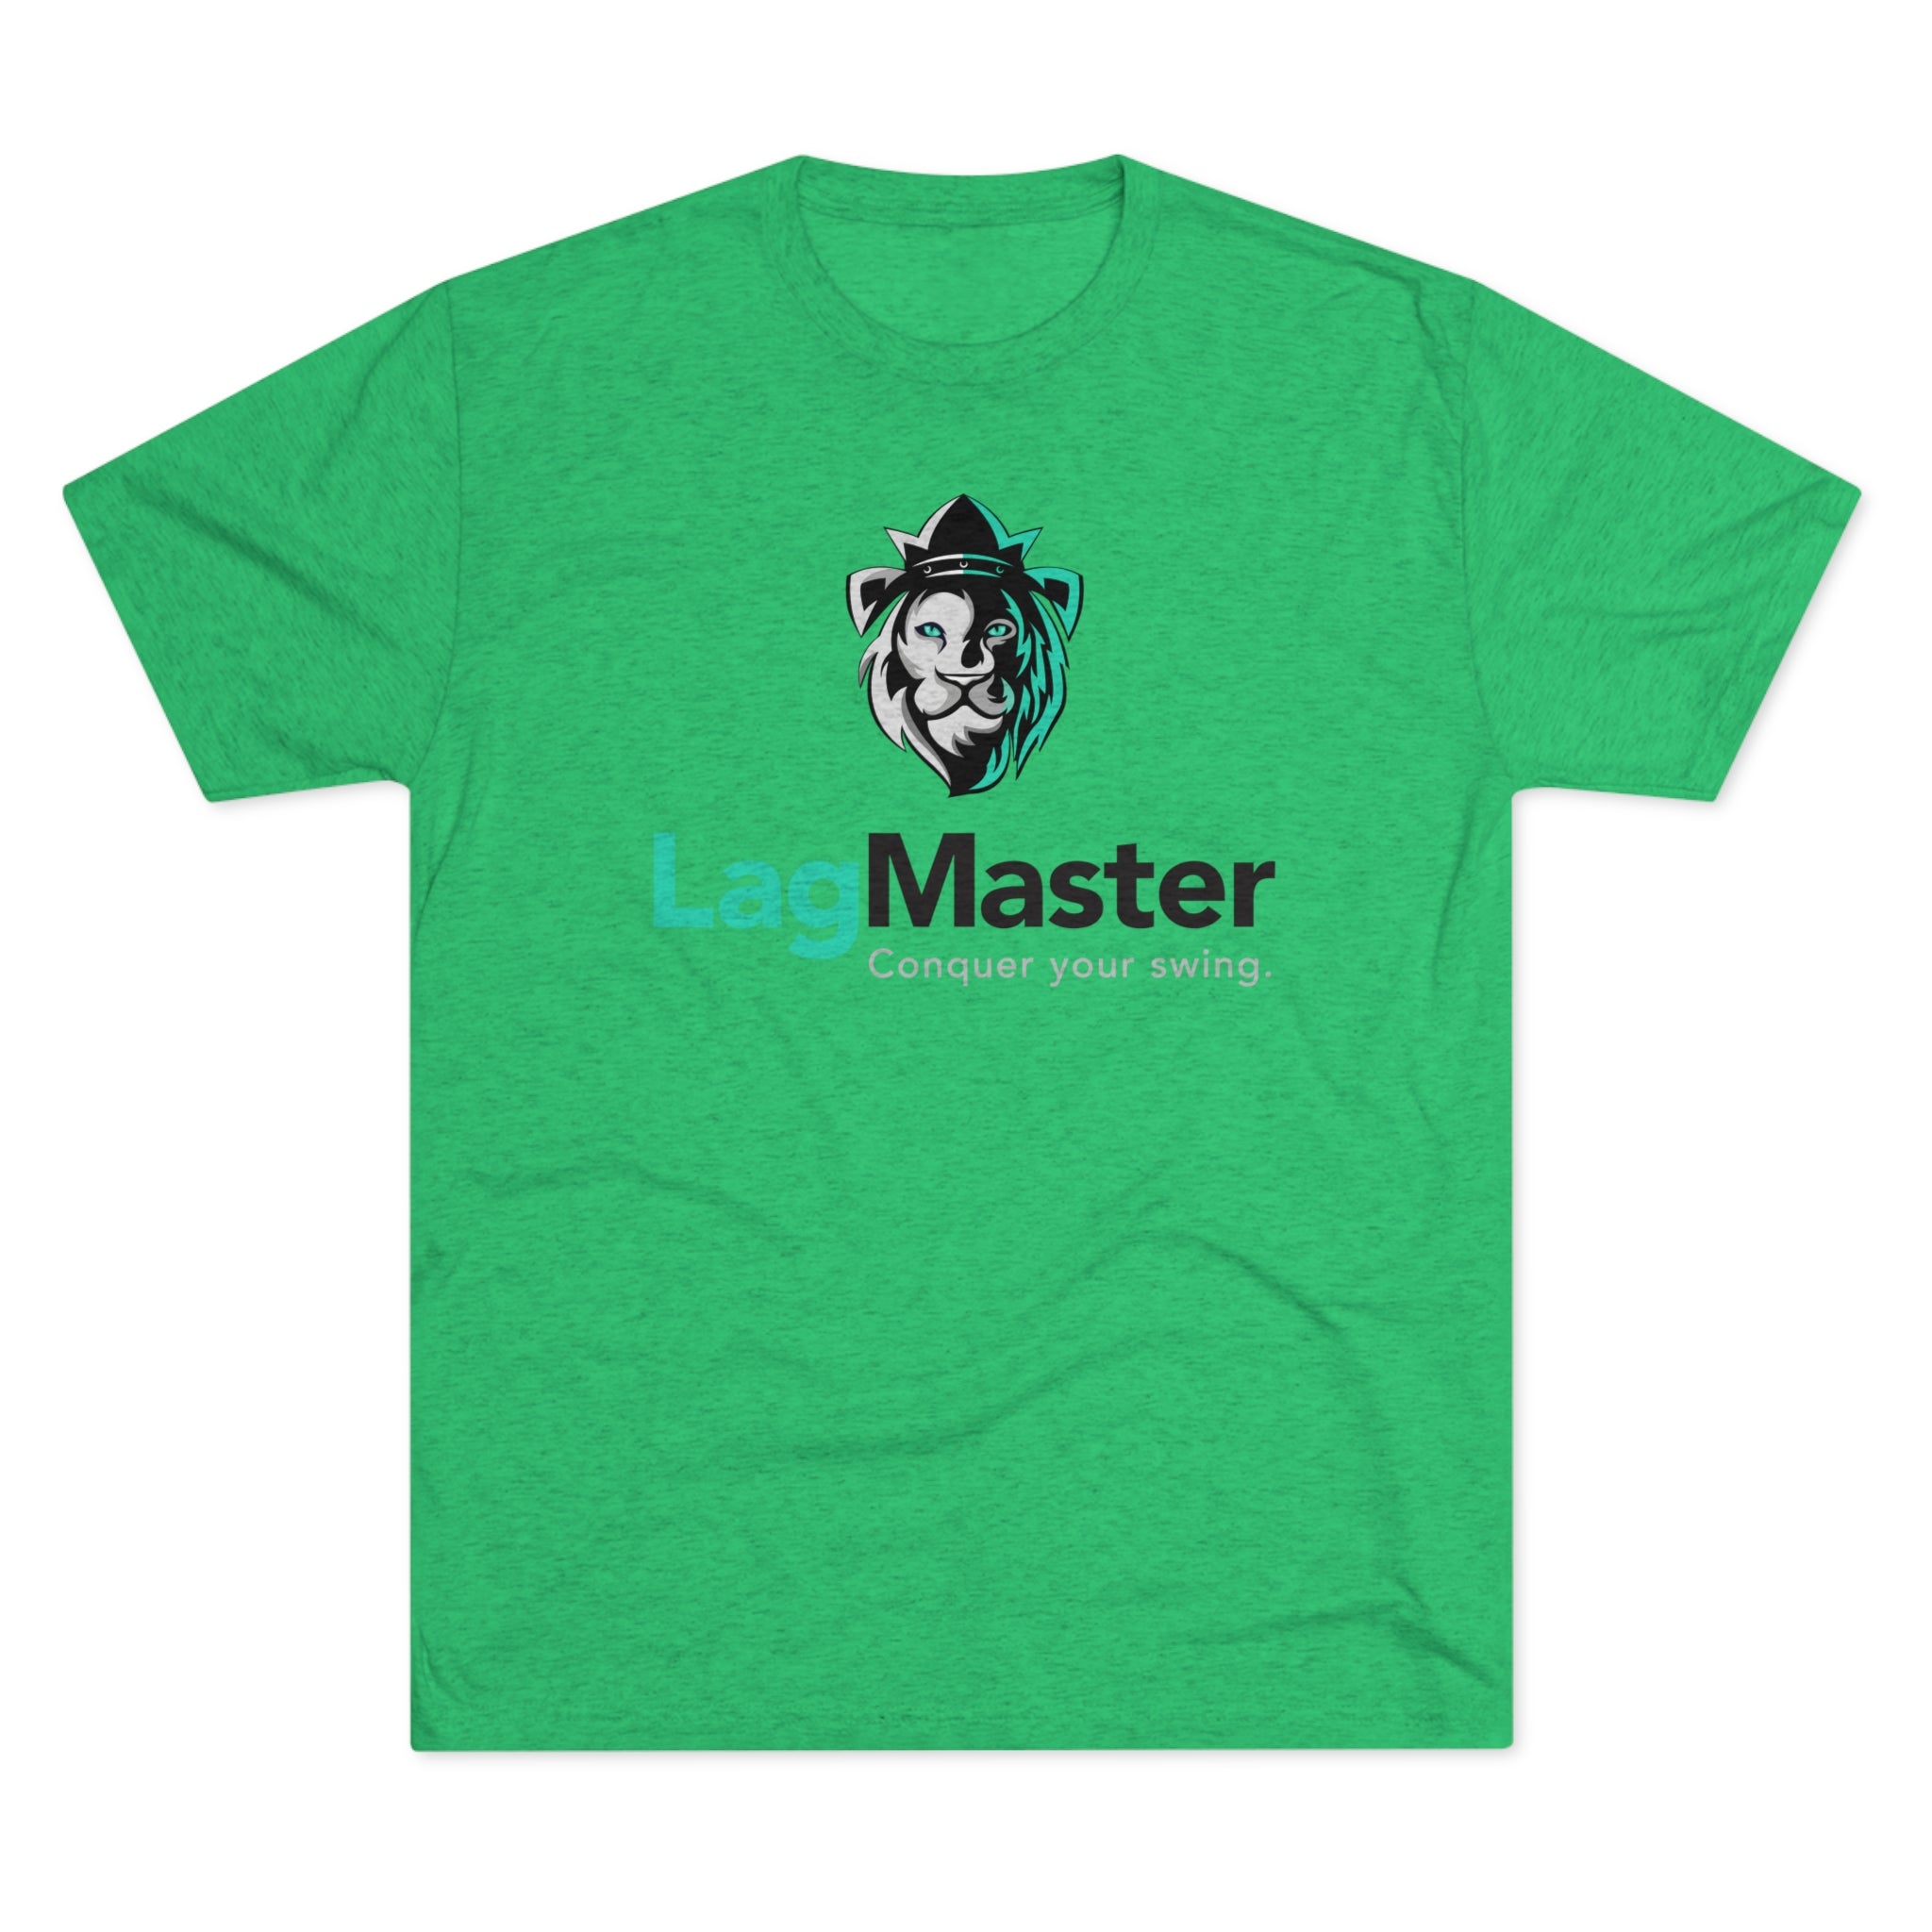 LagMaster Lion Logo Unisex Tri-Blend Crew Tee